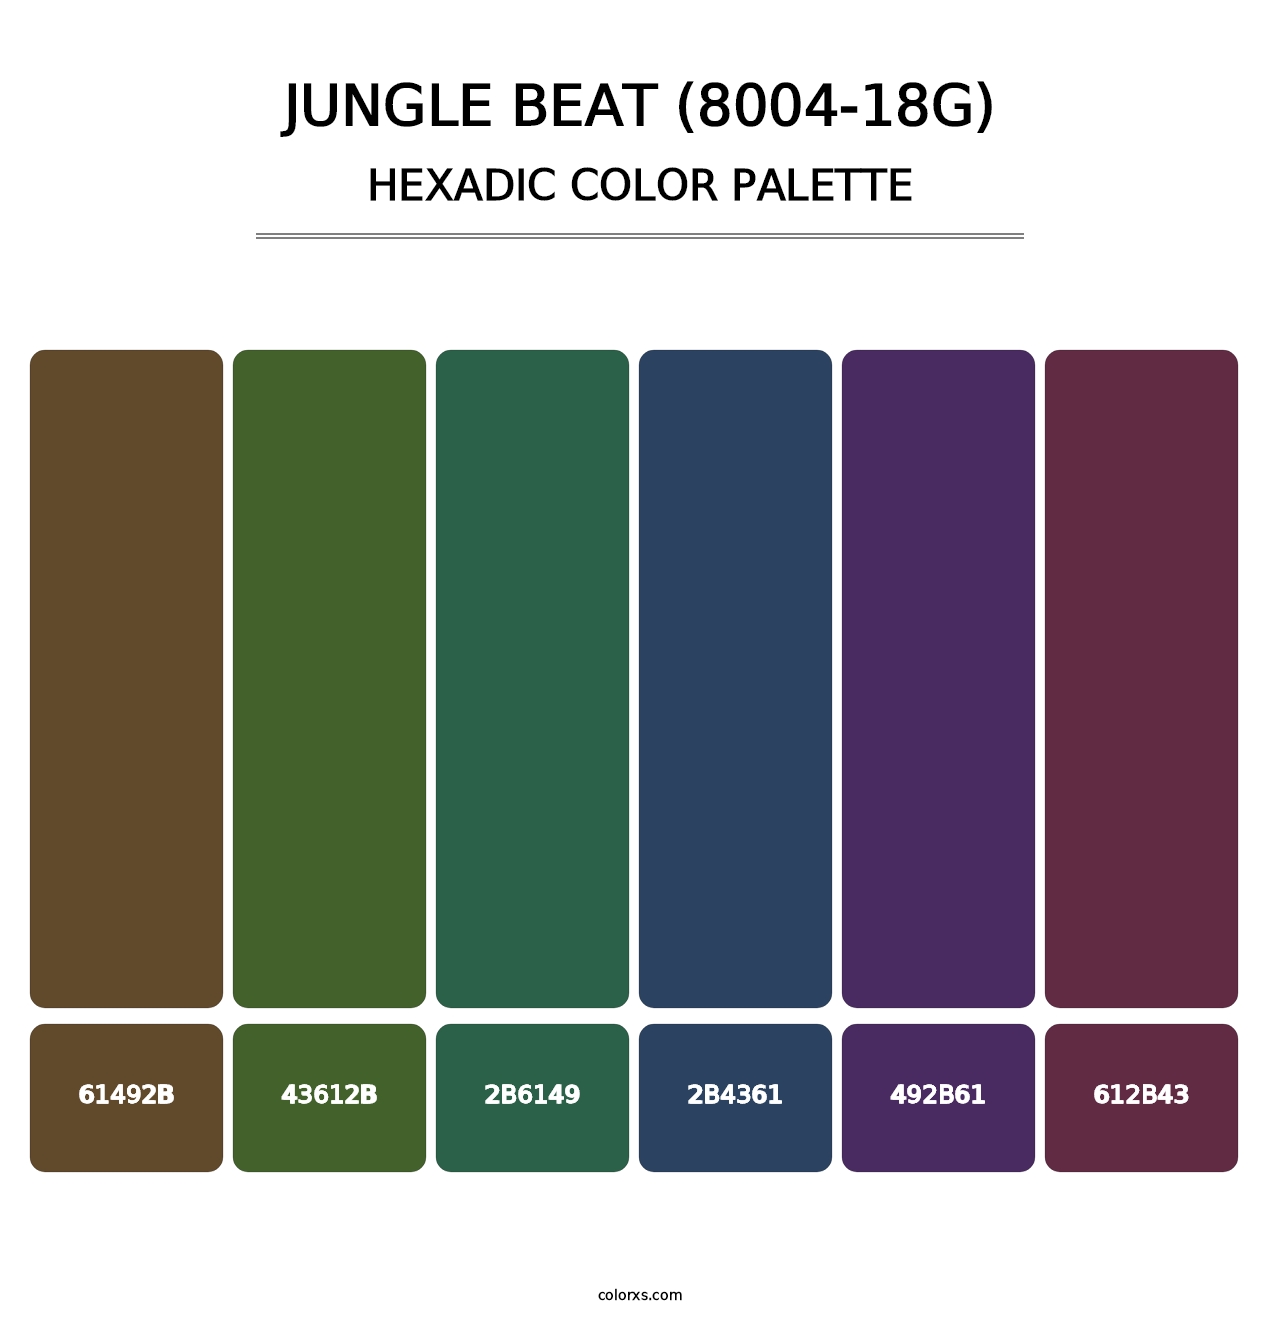 Jungle Beat (8004-18G) - Hexadic Color Palette